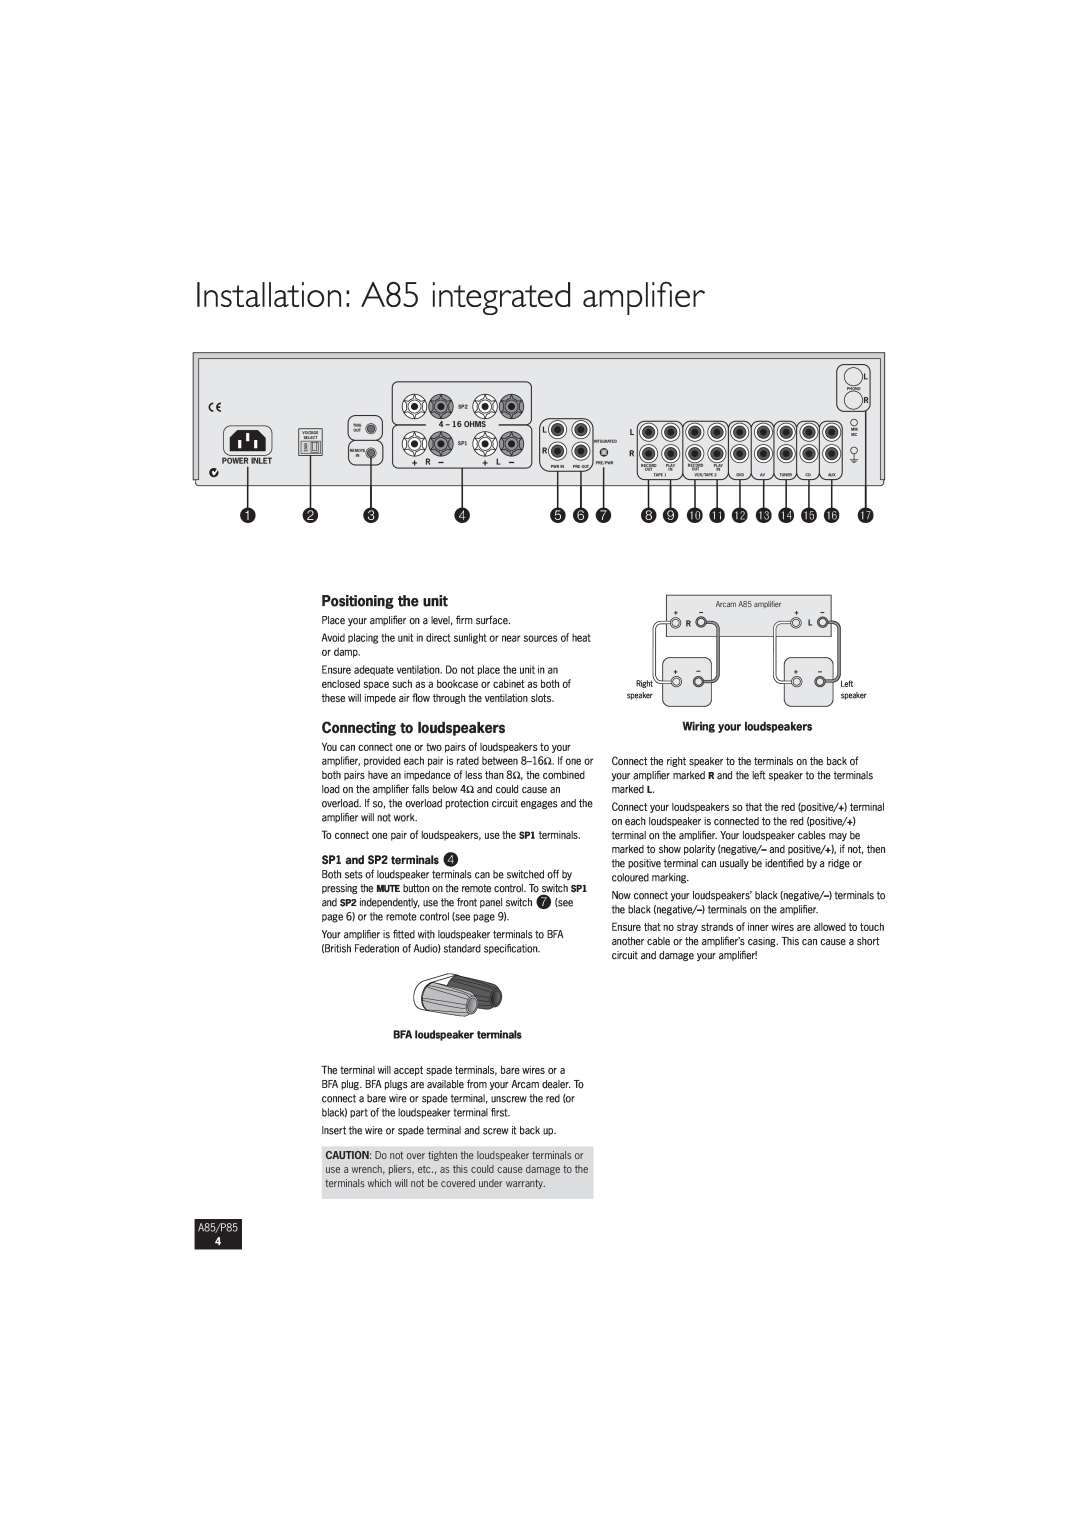 Arcam P85/3 manual Installation A85 integrated ampliﬁer, 8 9 bk bl bm bn bo bp bq br, Positioning the unit, + L, A85/P85 